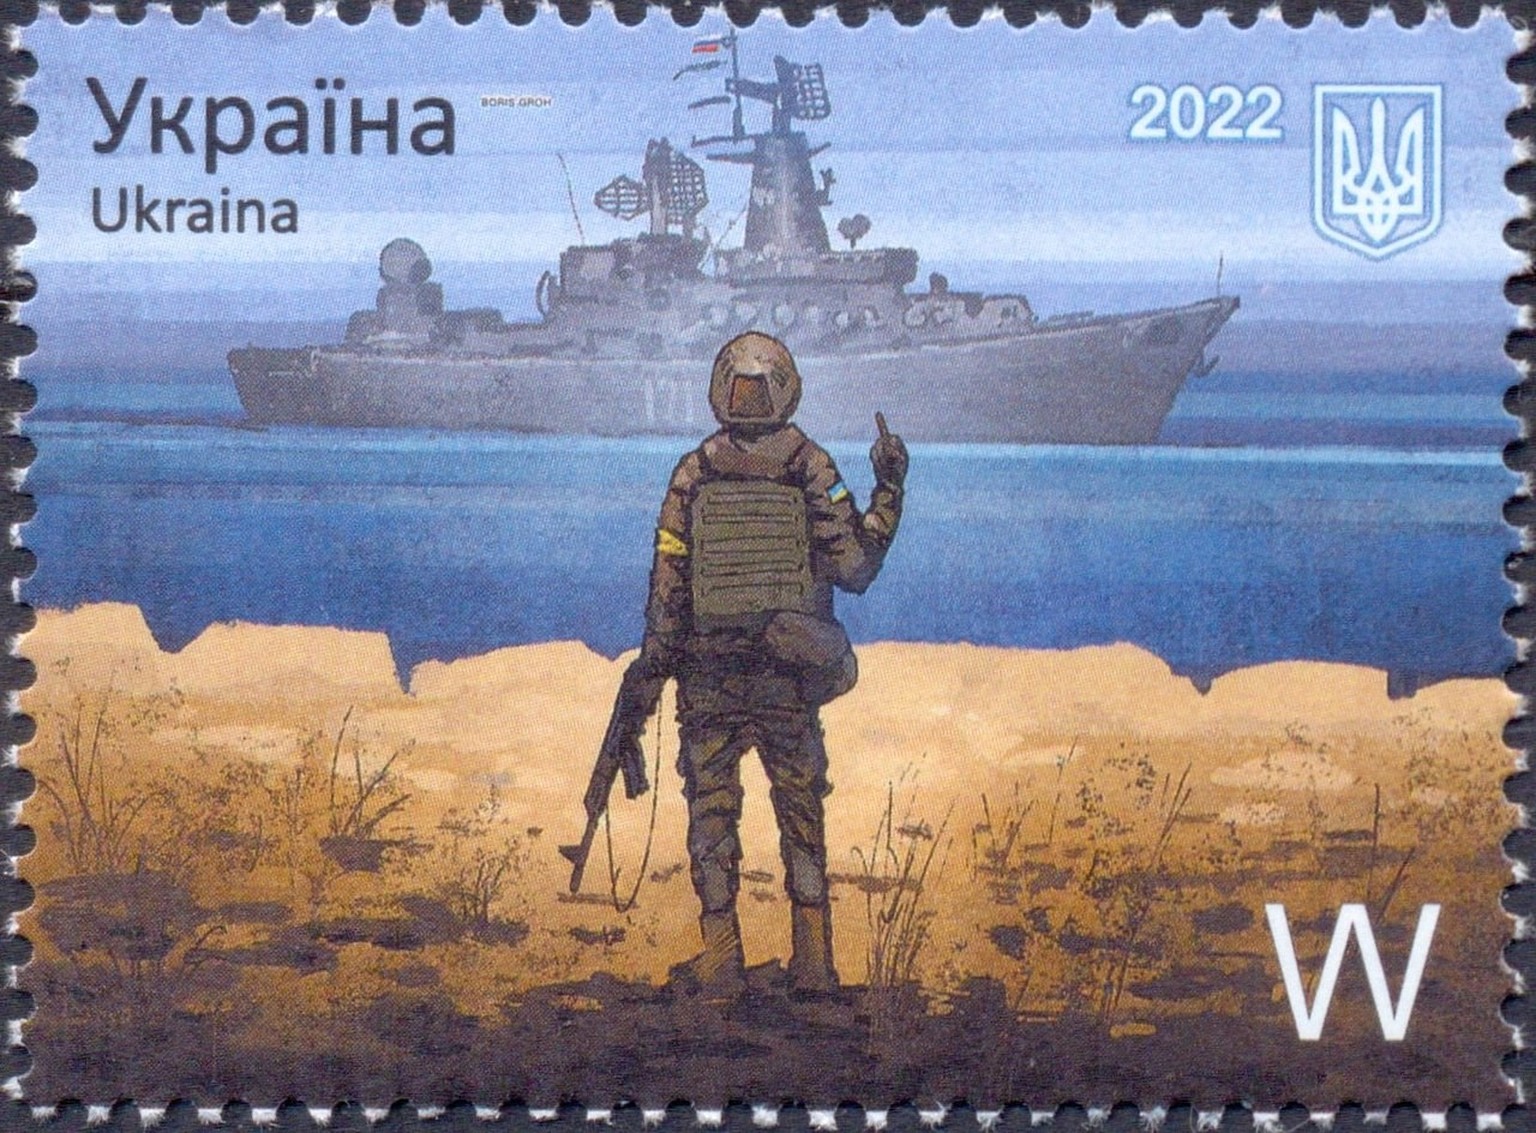 Ukrainian postage stamp, depicting a Ukrainian soldier giving Russian cruiser Moskva the finger.
https://en.wikipedia.org/wiki/Snake_Island_(Ukraine)#/media/File:Stamp_of_Ukraine_s1985.jpg